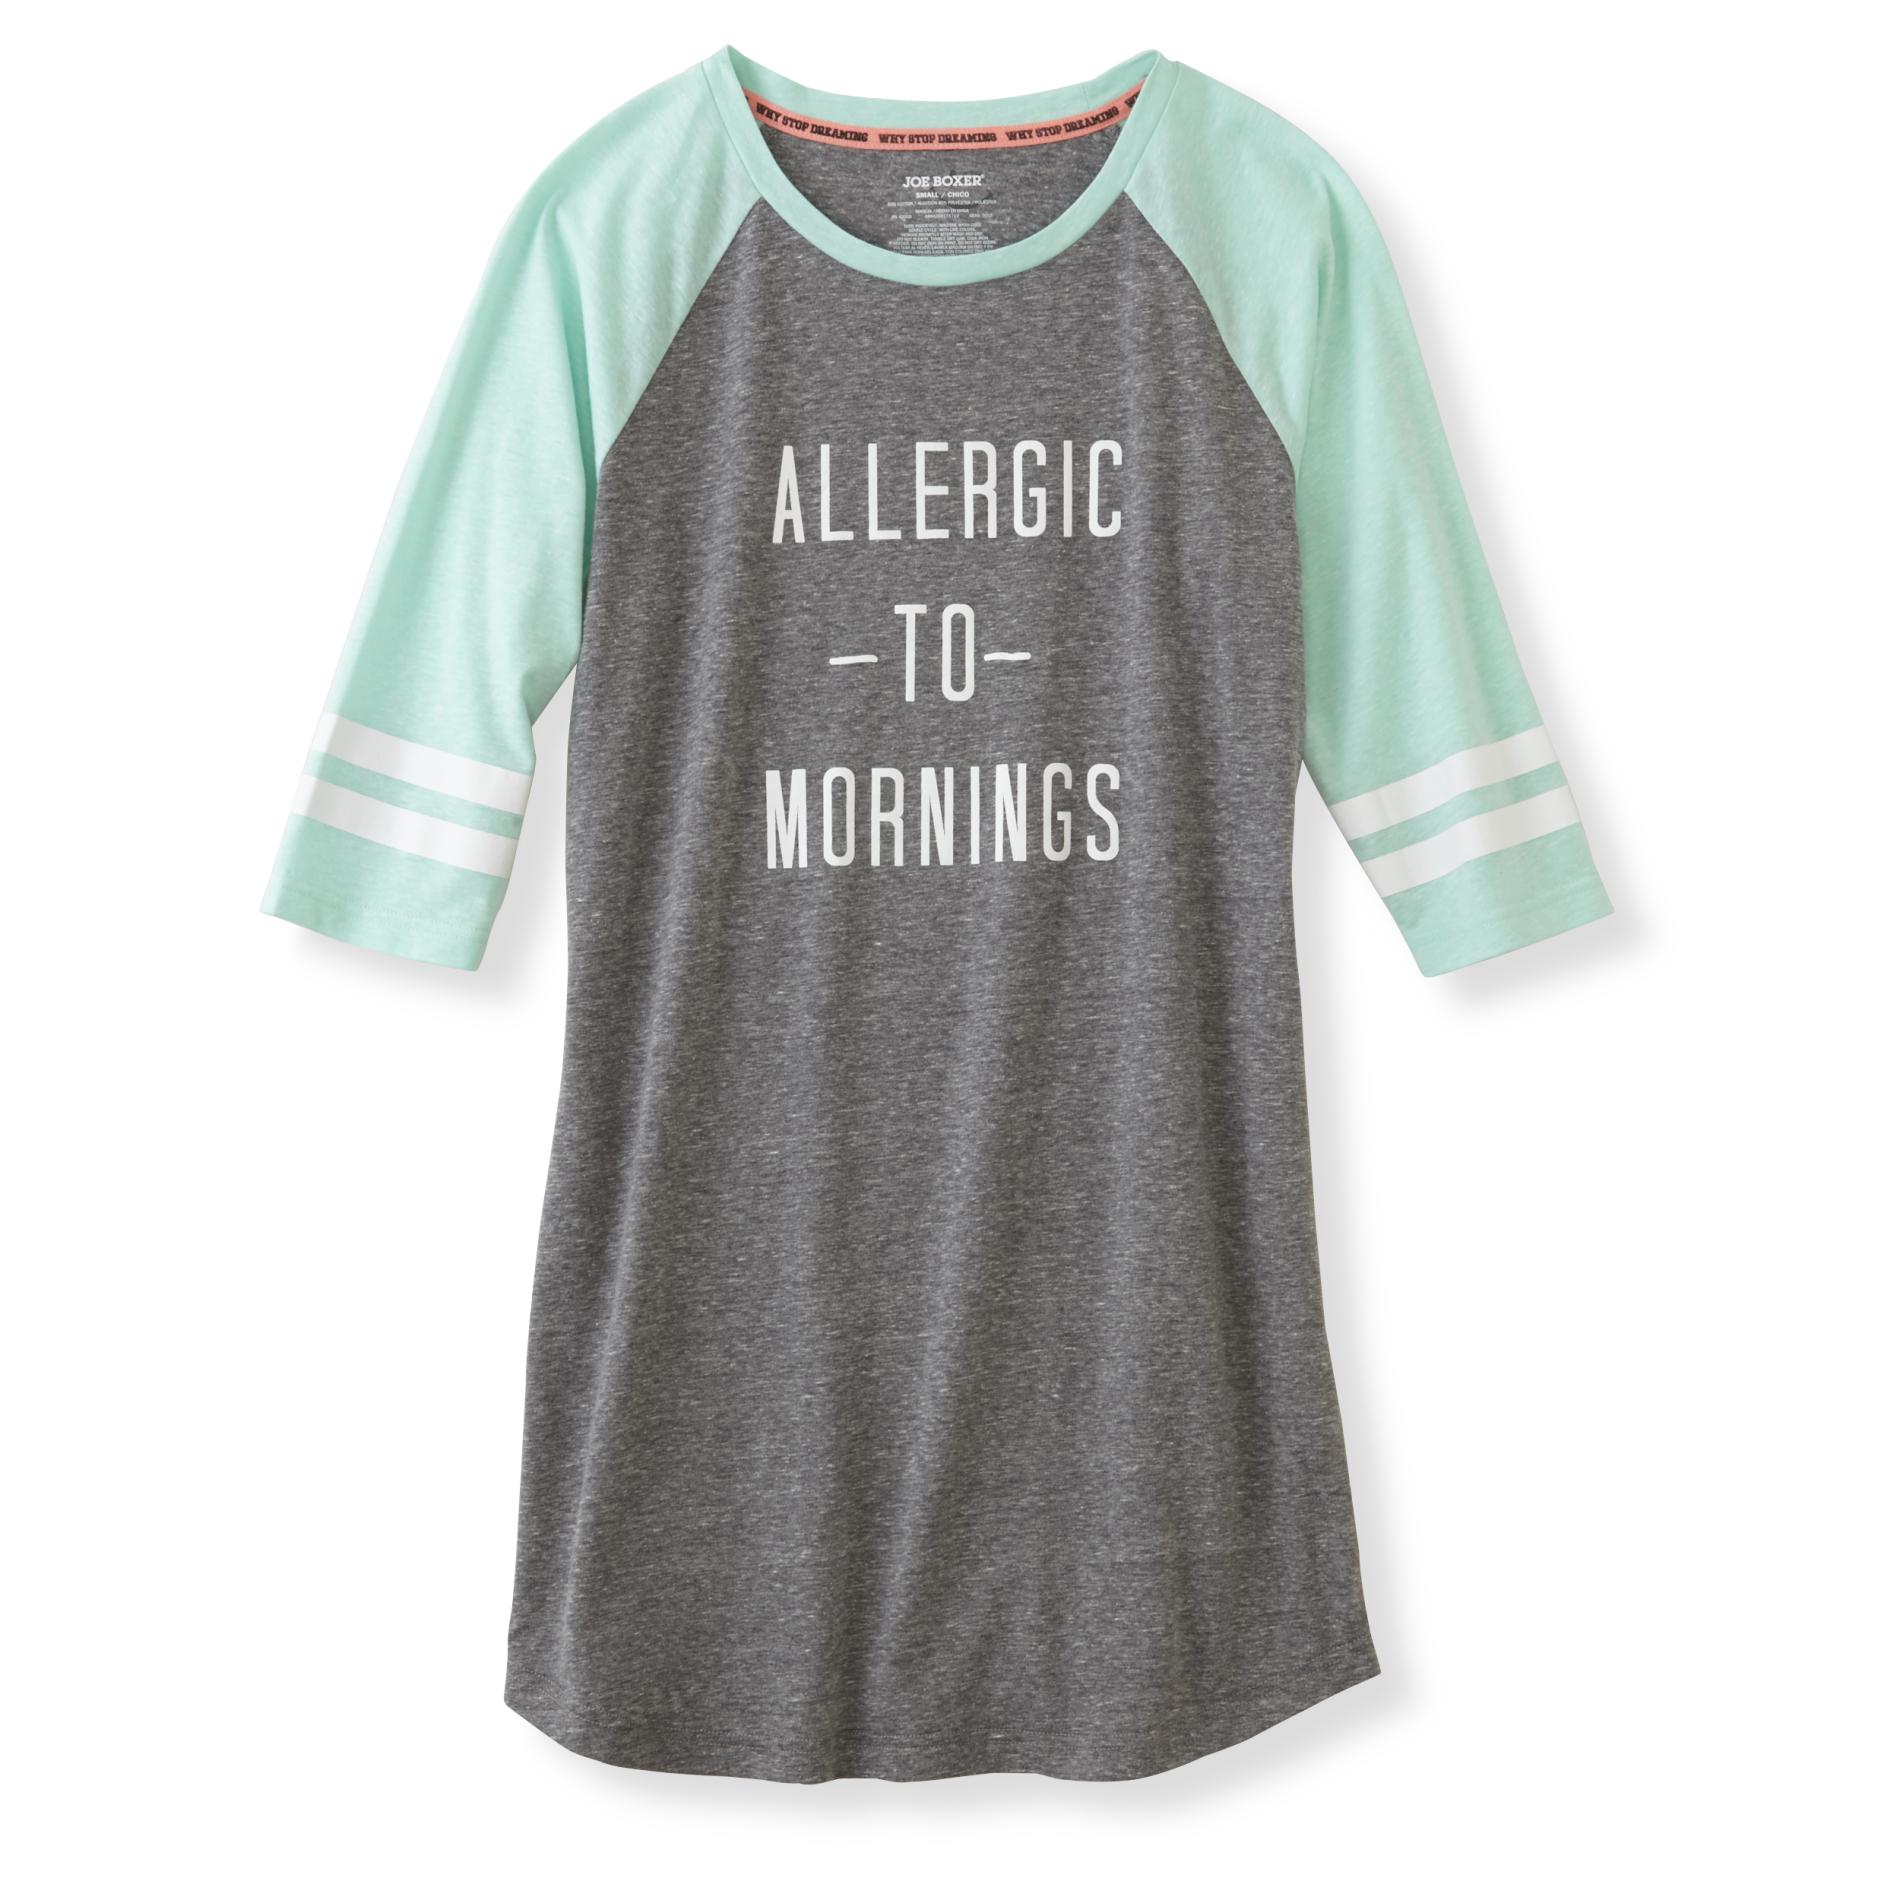 Joe Boxer Junior's Graphic Sleep Shirt - Allergic to Mornings